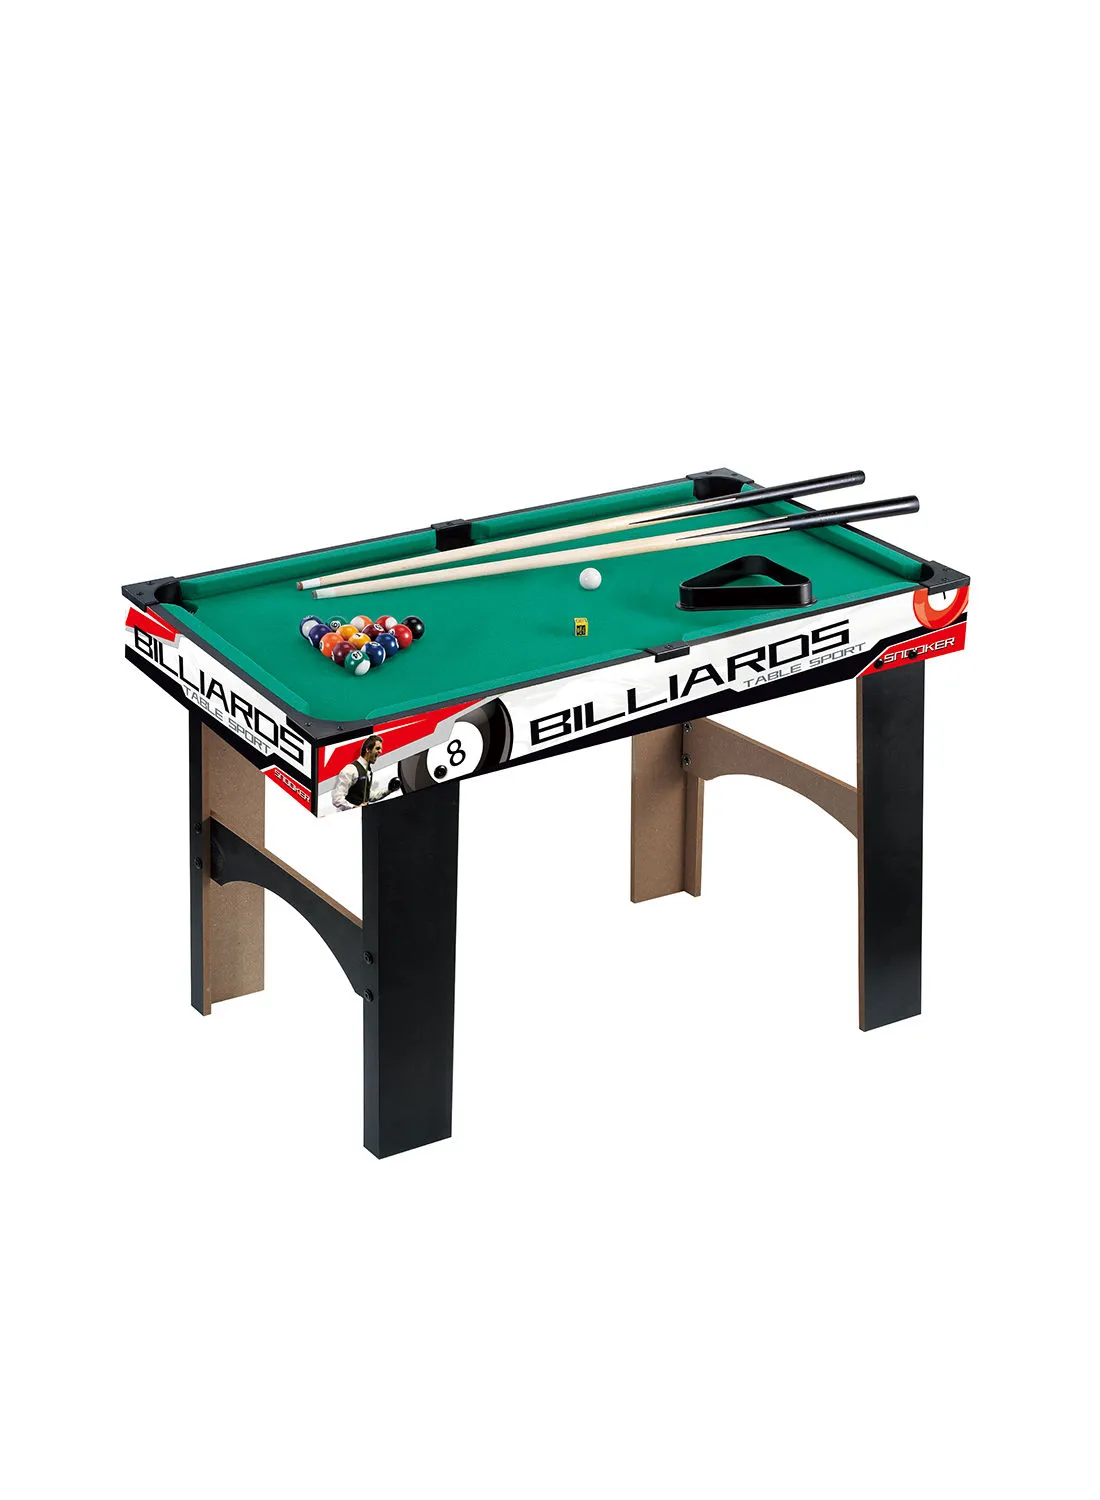 XIANGJUN Printed Billiards Pool Table Game Set 122 x 62.5 x 76cm